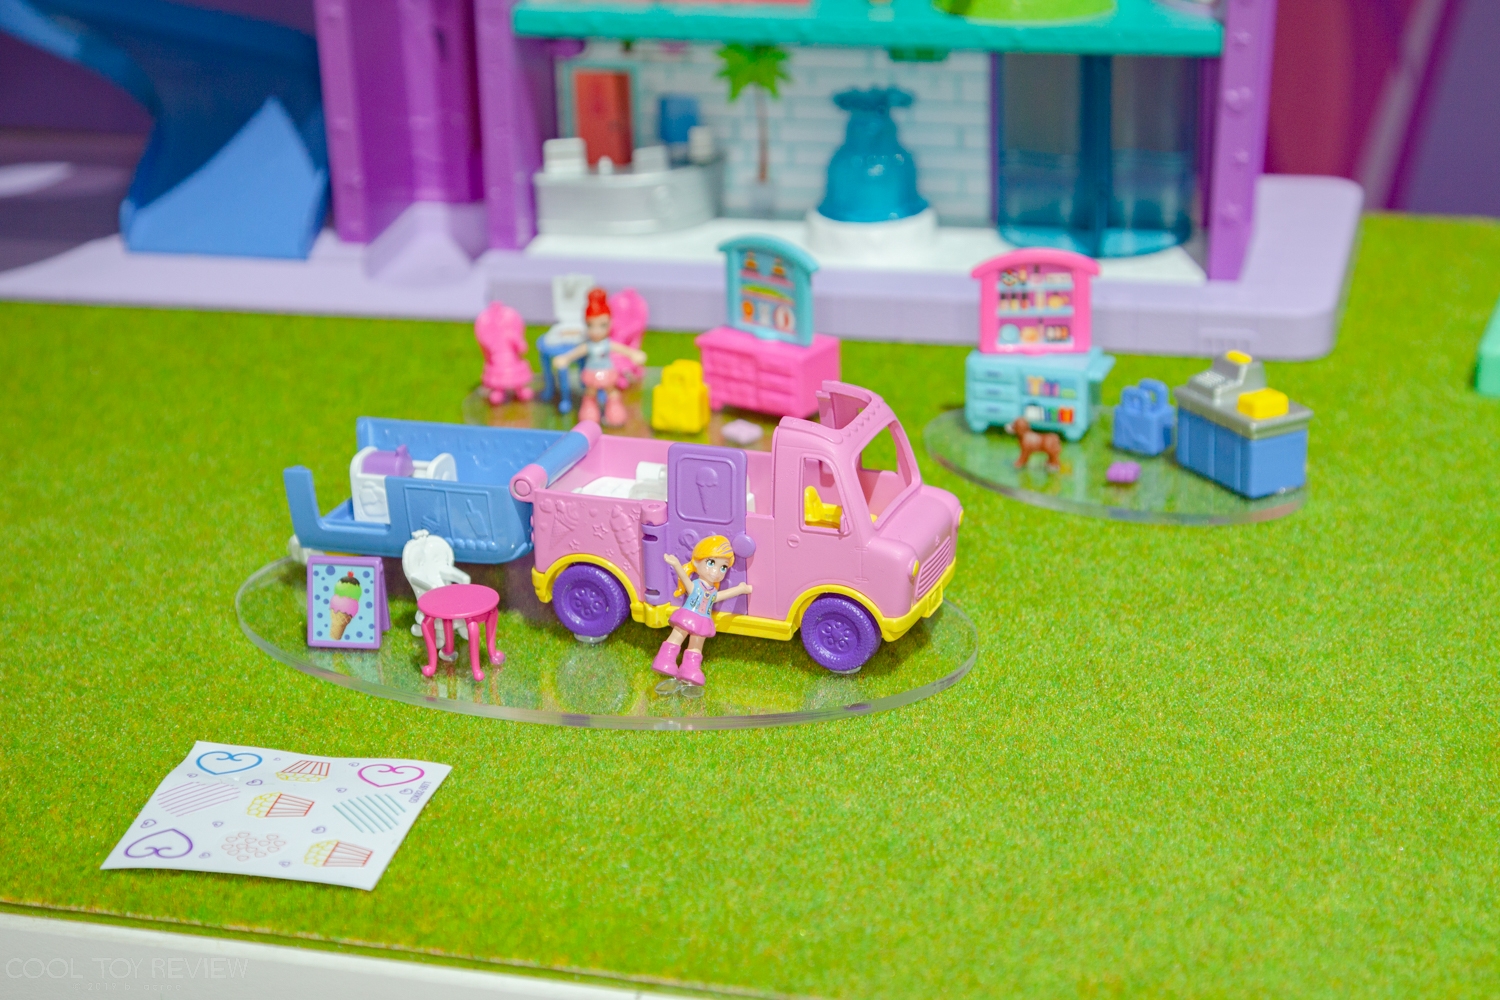 MATTEL-Toy-Fair-2019-198.jpg